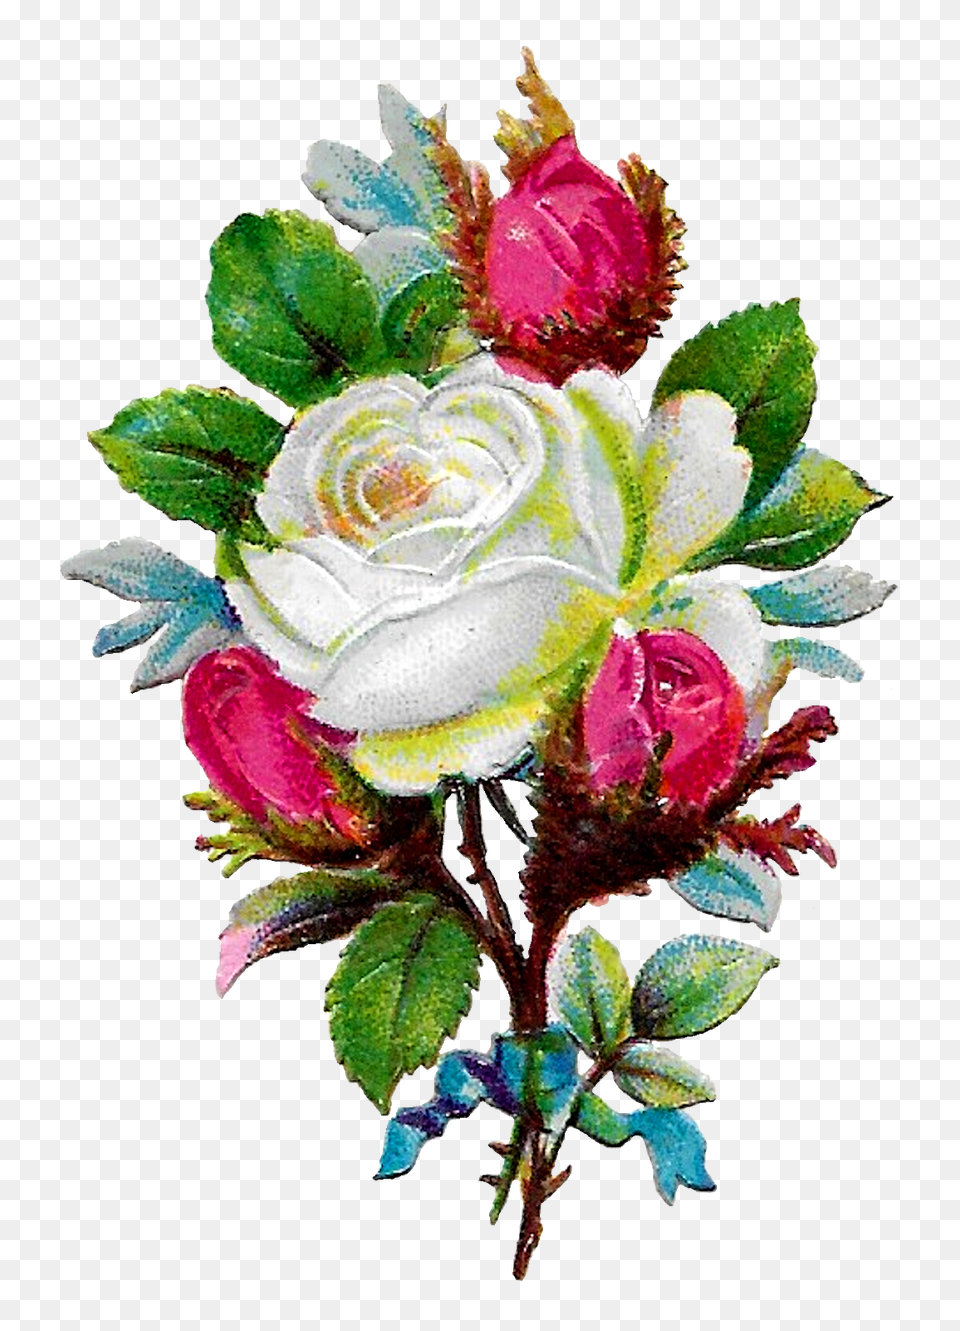 The Graphics Monarch Shabby Chic White Rose Clip Art Flower Craft, Plant, Pattern, Flower Bouquet, Flower Arrangement Png Image